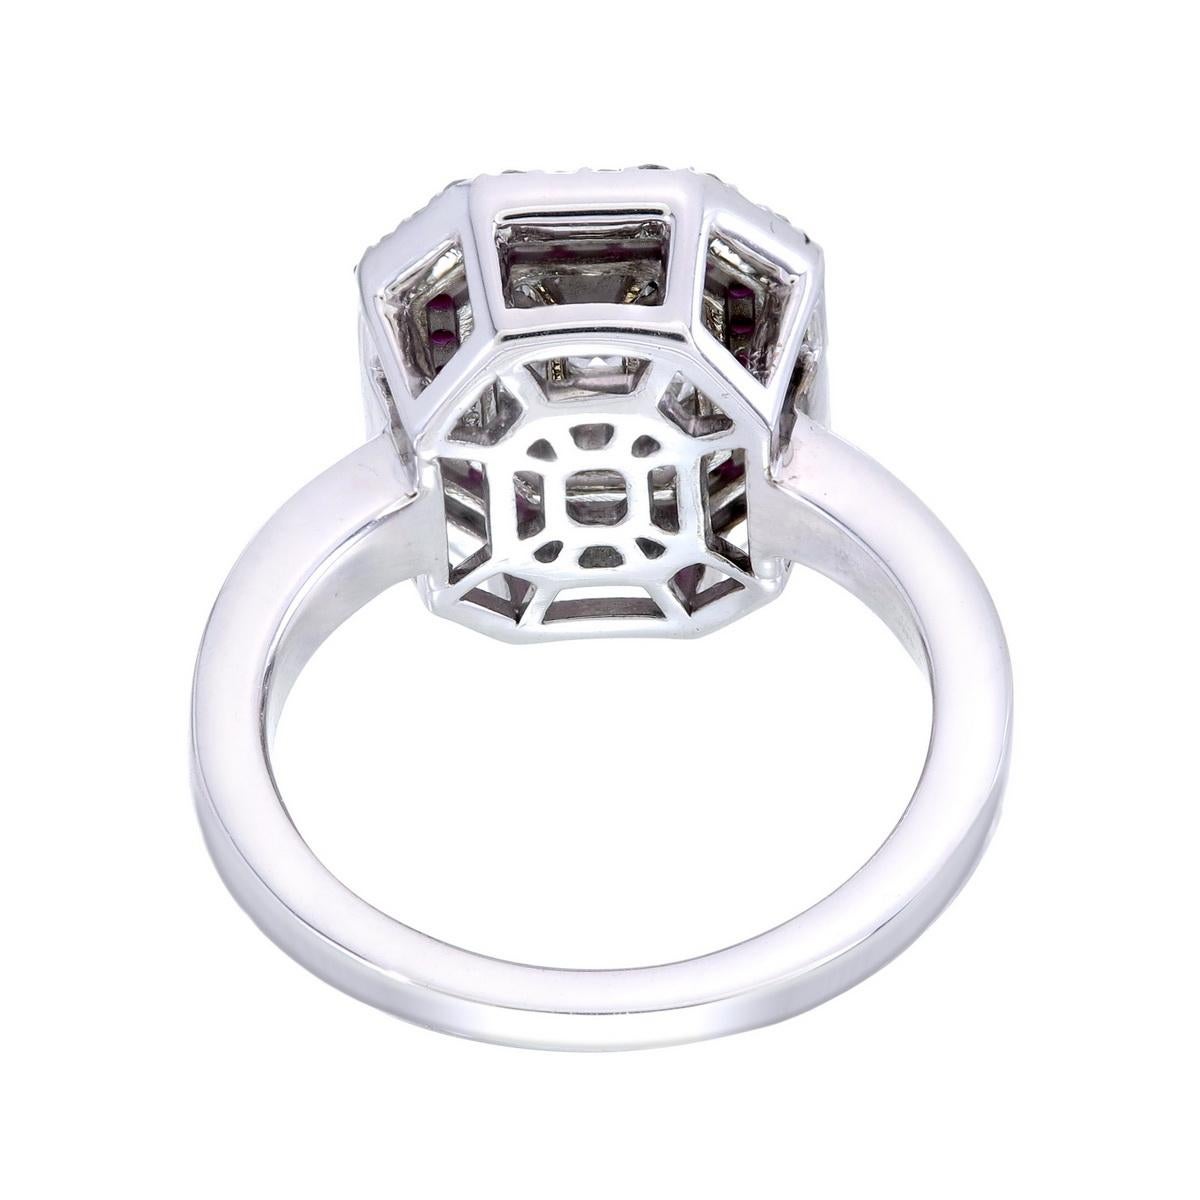 For Sale:  3 carat face look Emerald shape Piecut diamond with a Border of ruby & diamonds 3